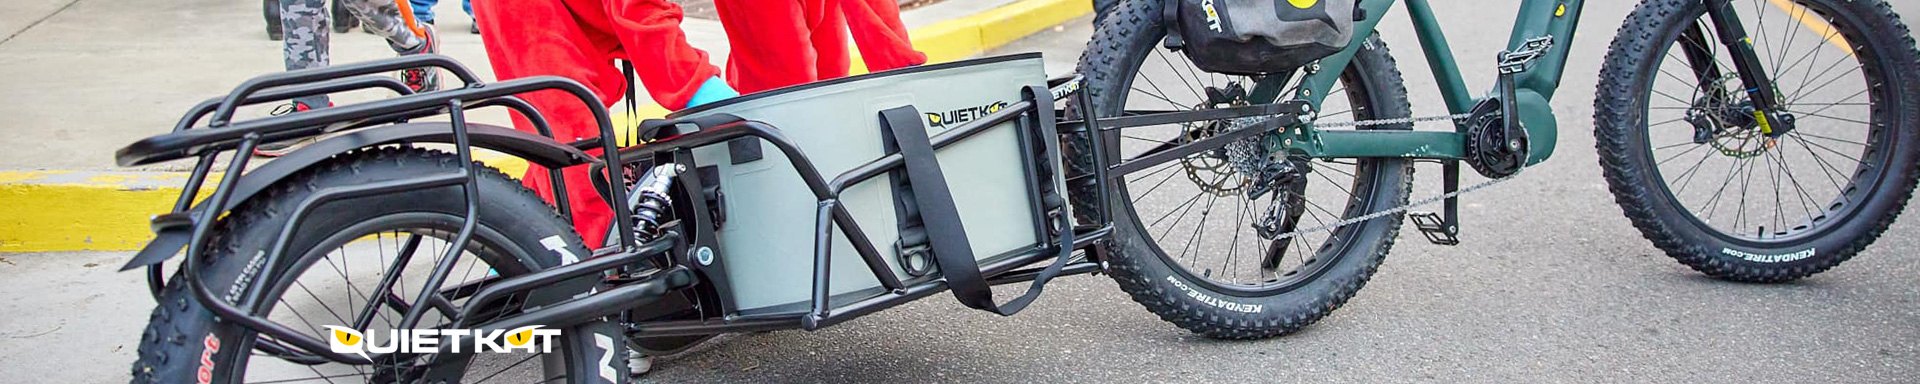 QuietKat Bike Accessories